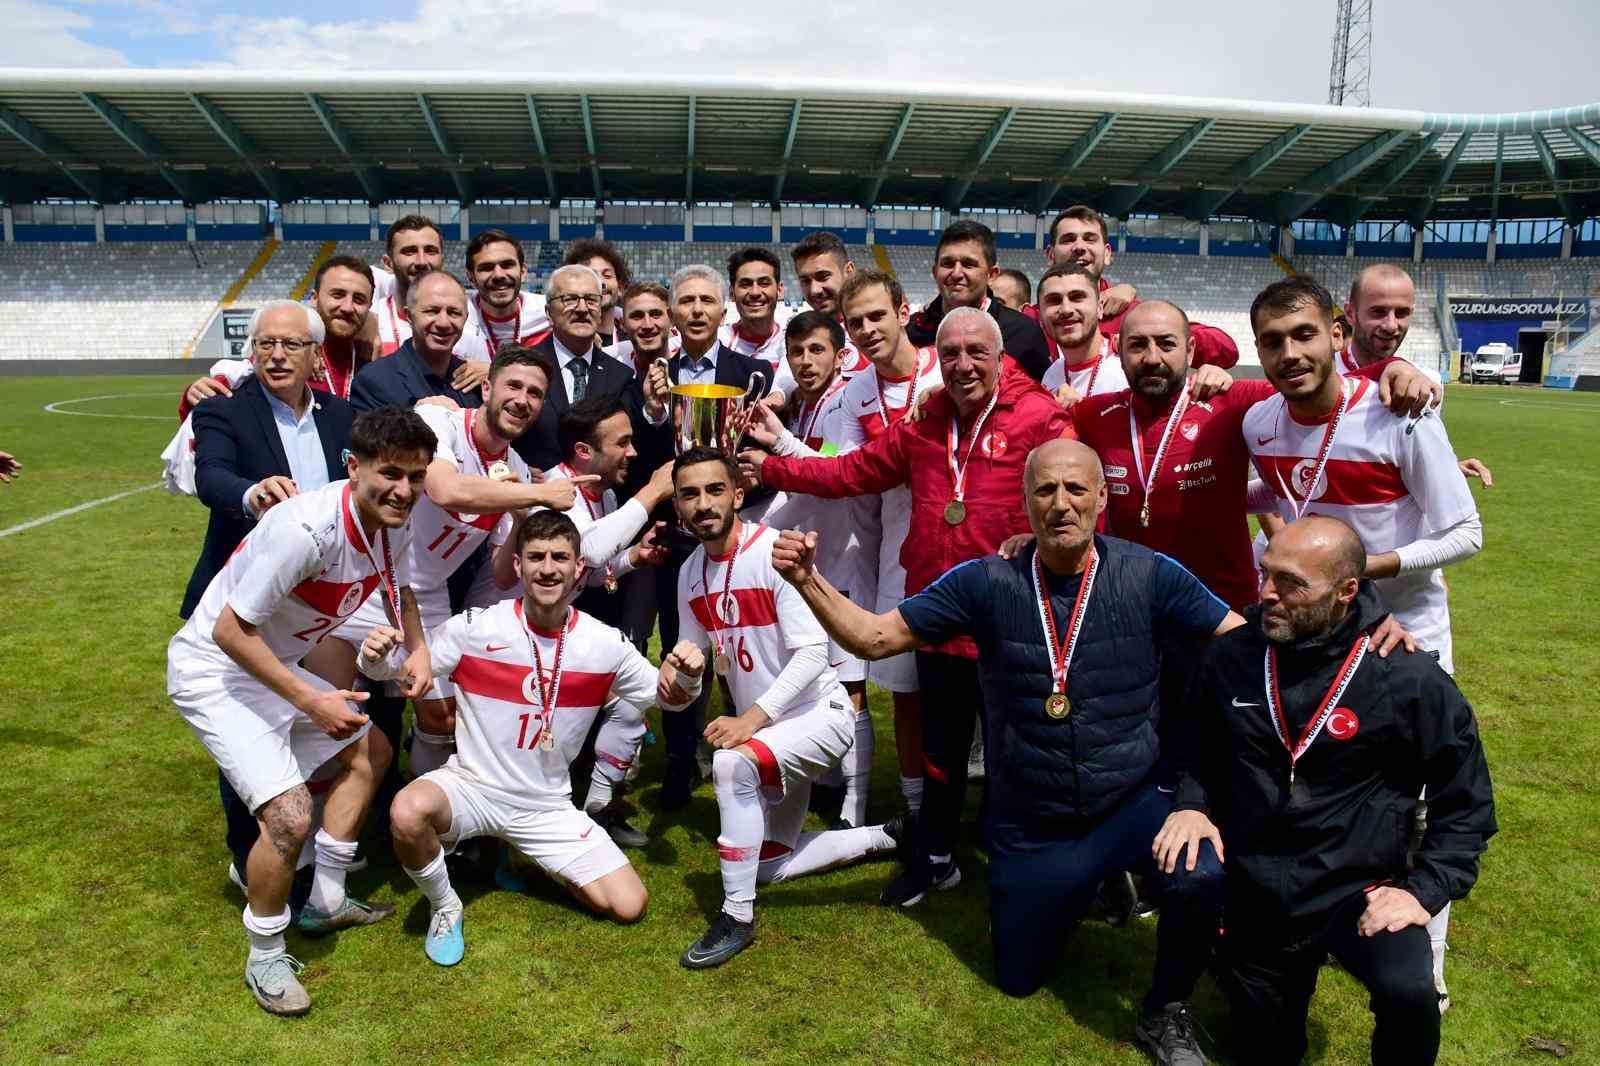 UEFA Regions Cup’ta şampiyon İstanbul
